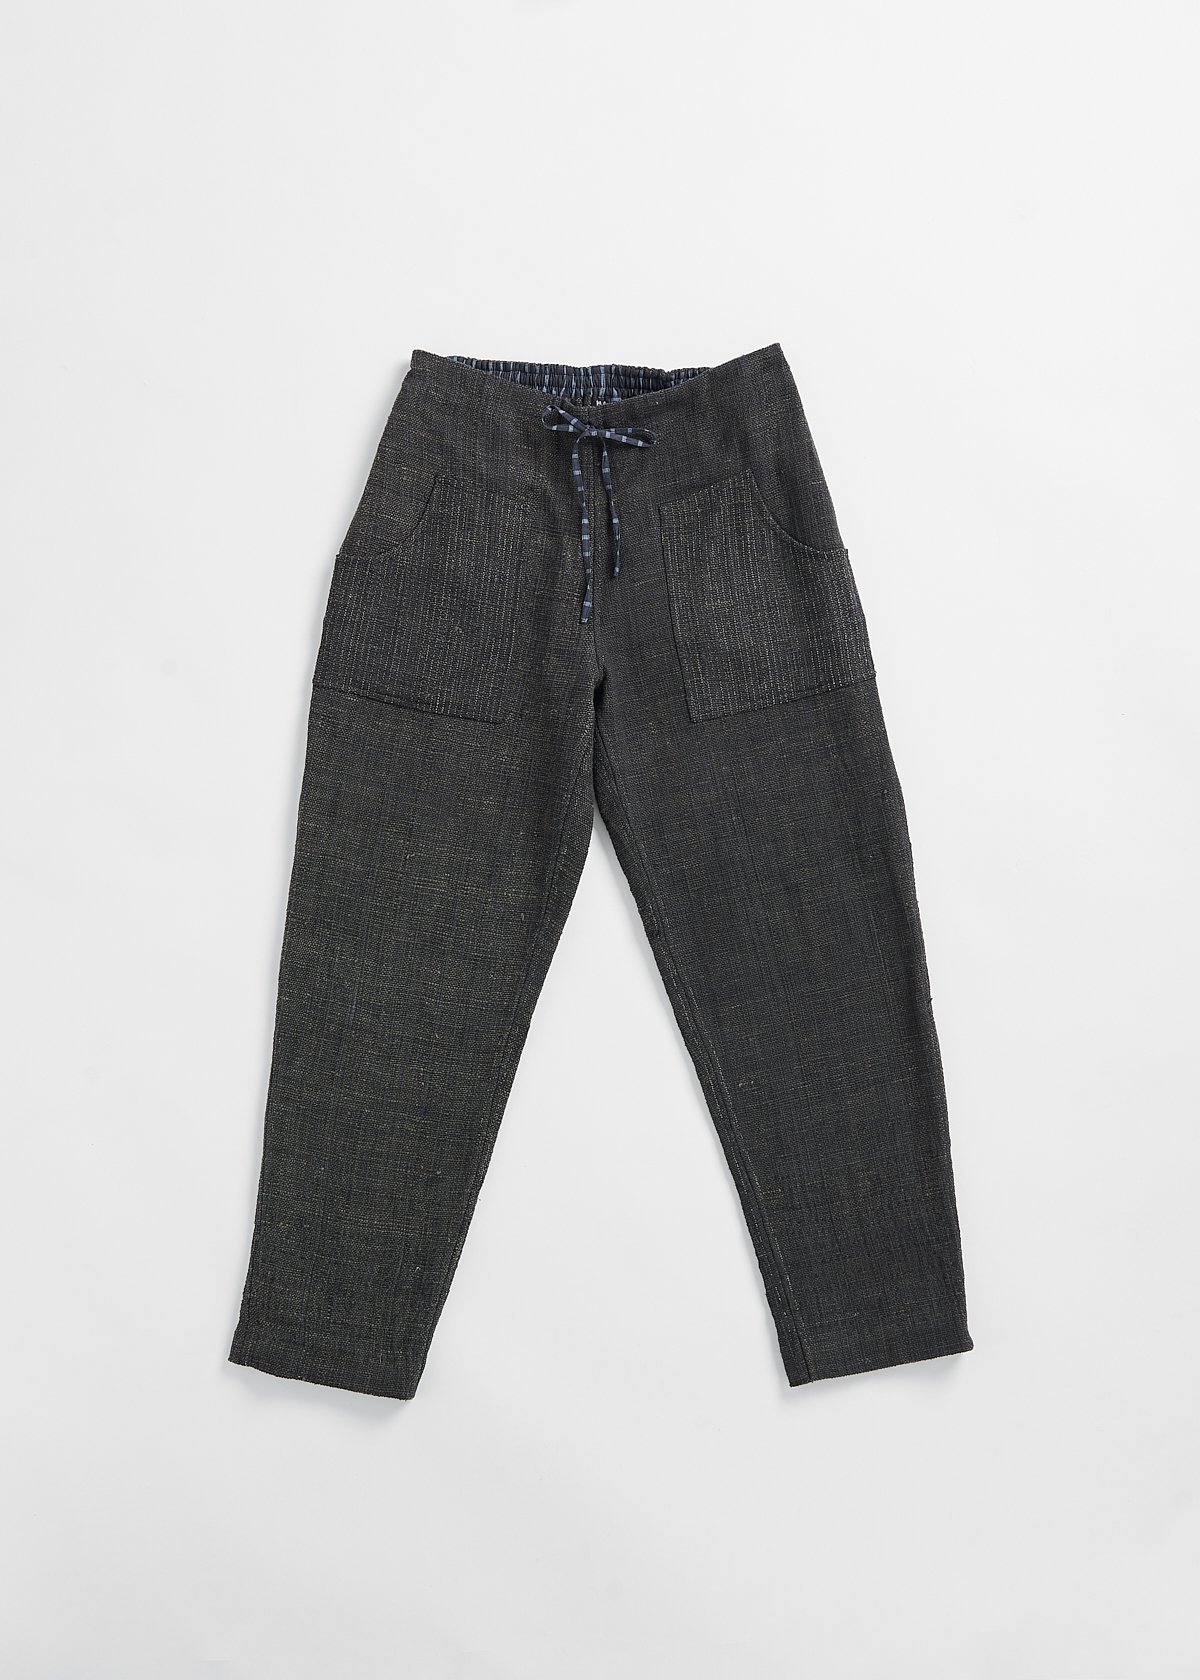 maku KEROAC BK - 100% Cotton Handwoven Full Pants